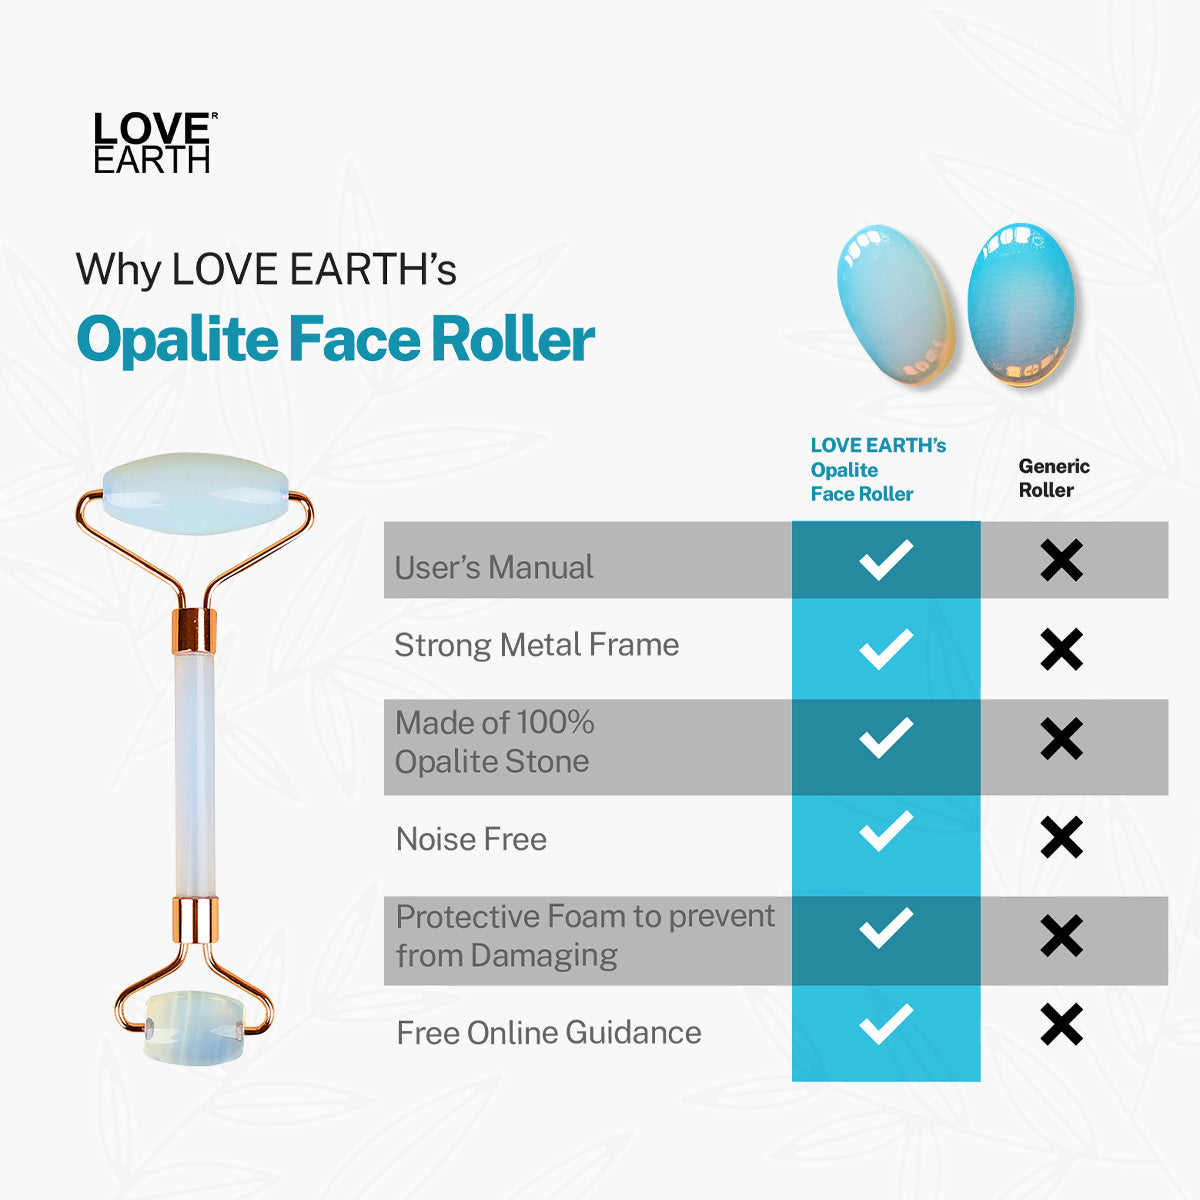 Love Earth’s Opalite Face Roller